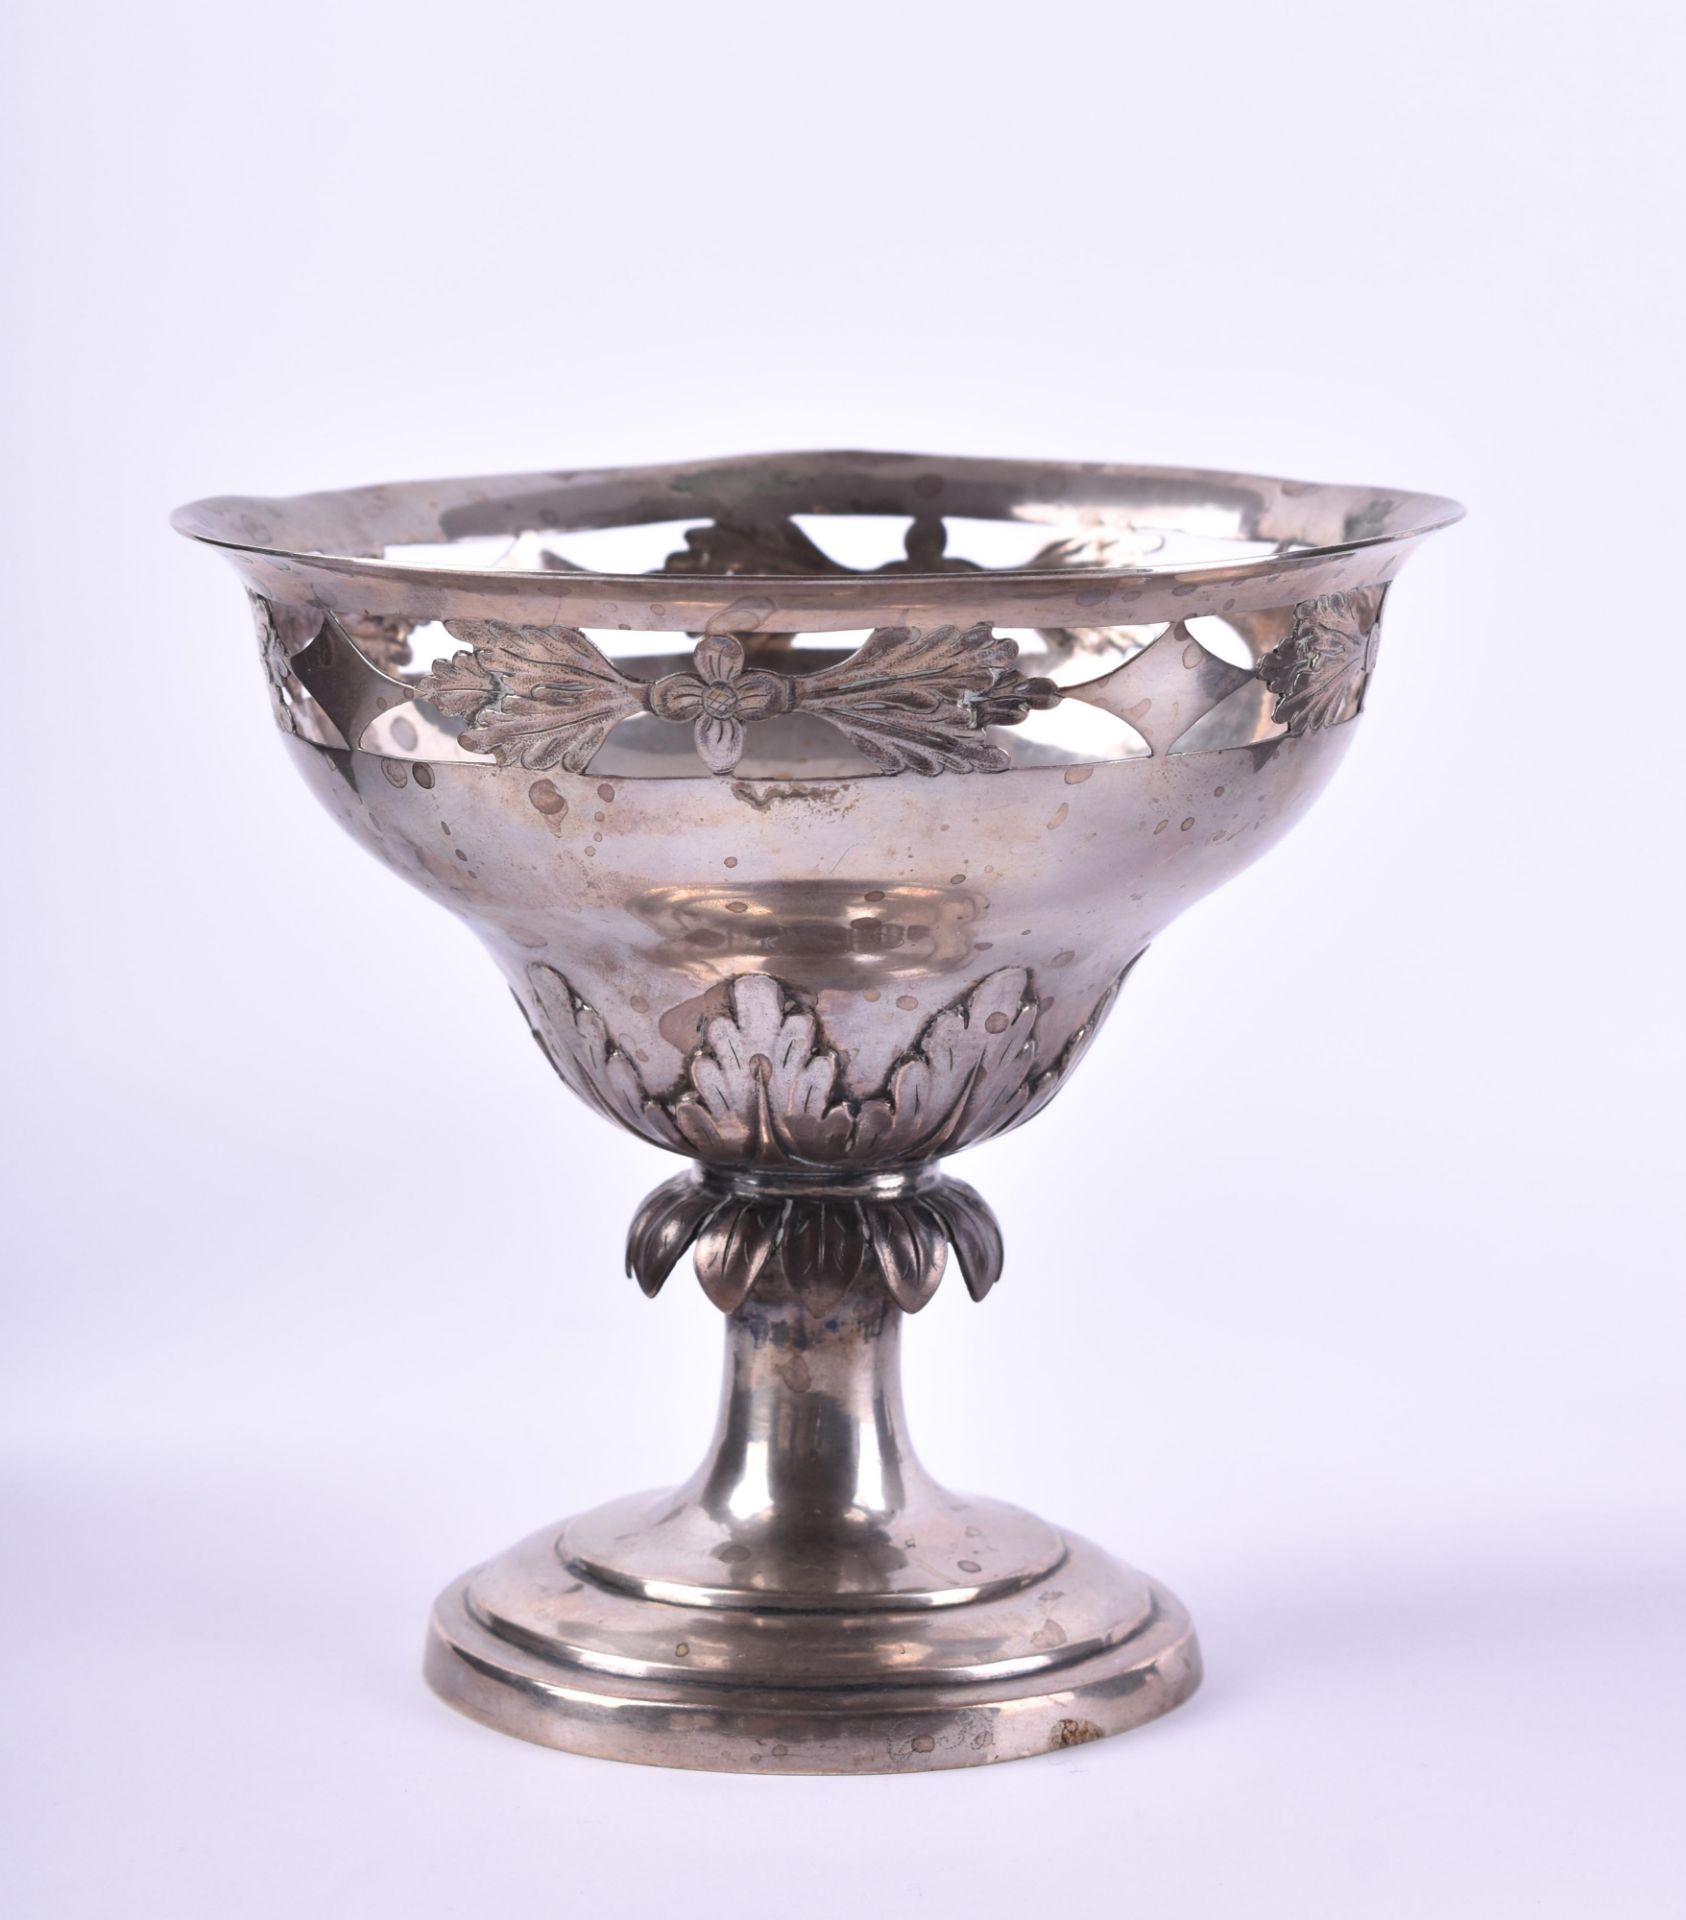  Foot bowl 18th / 19th century